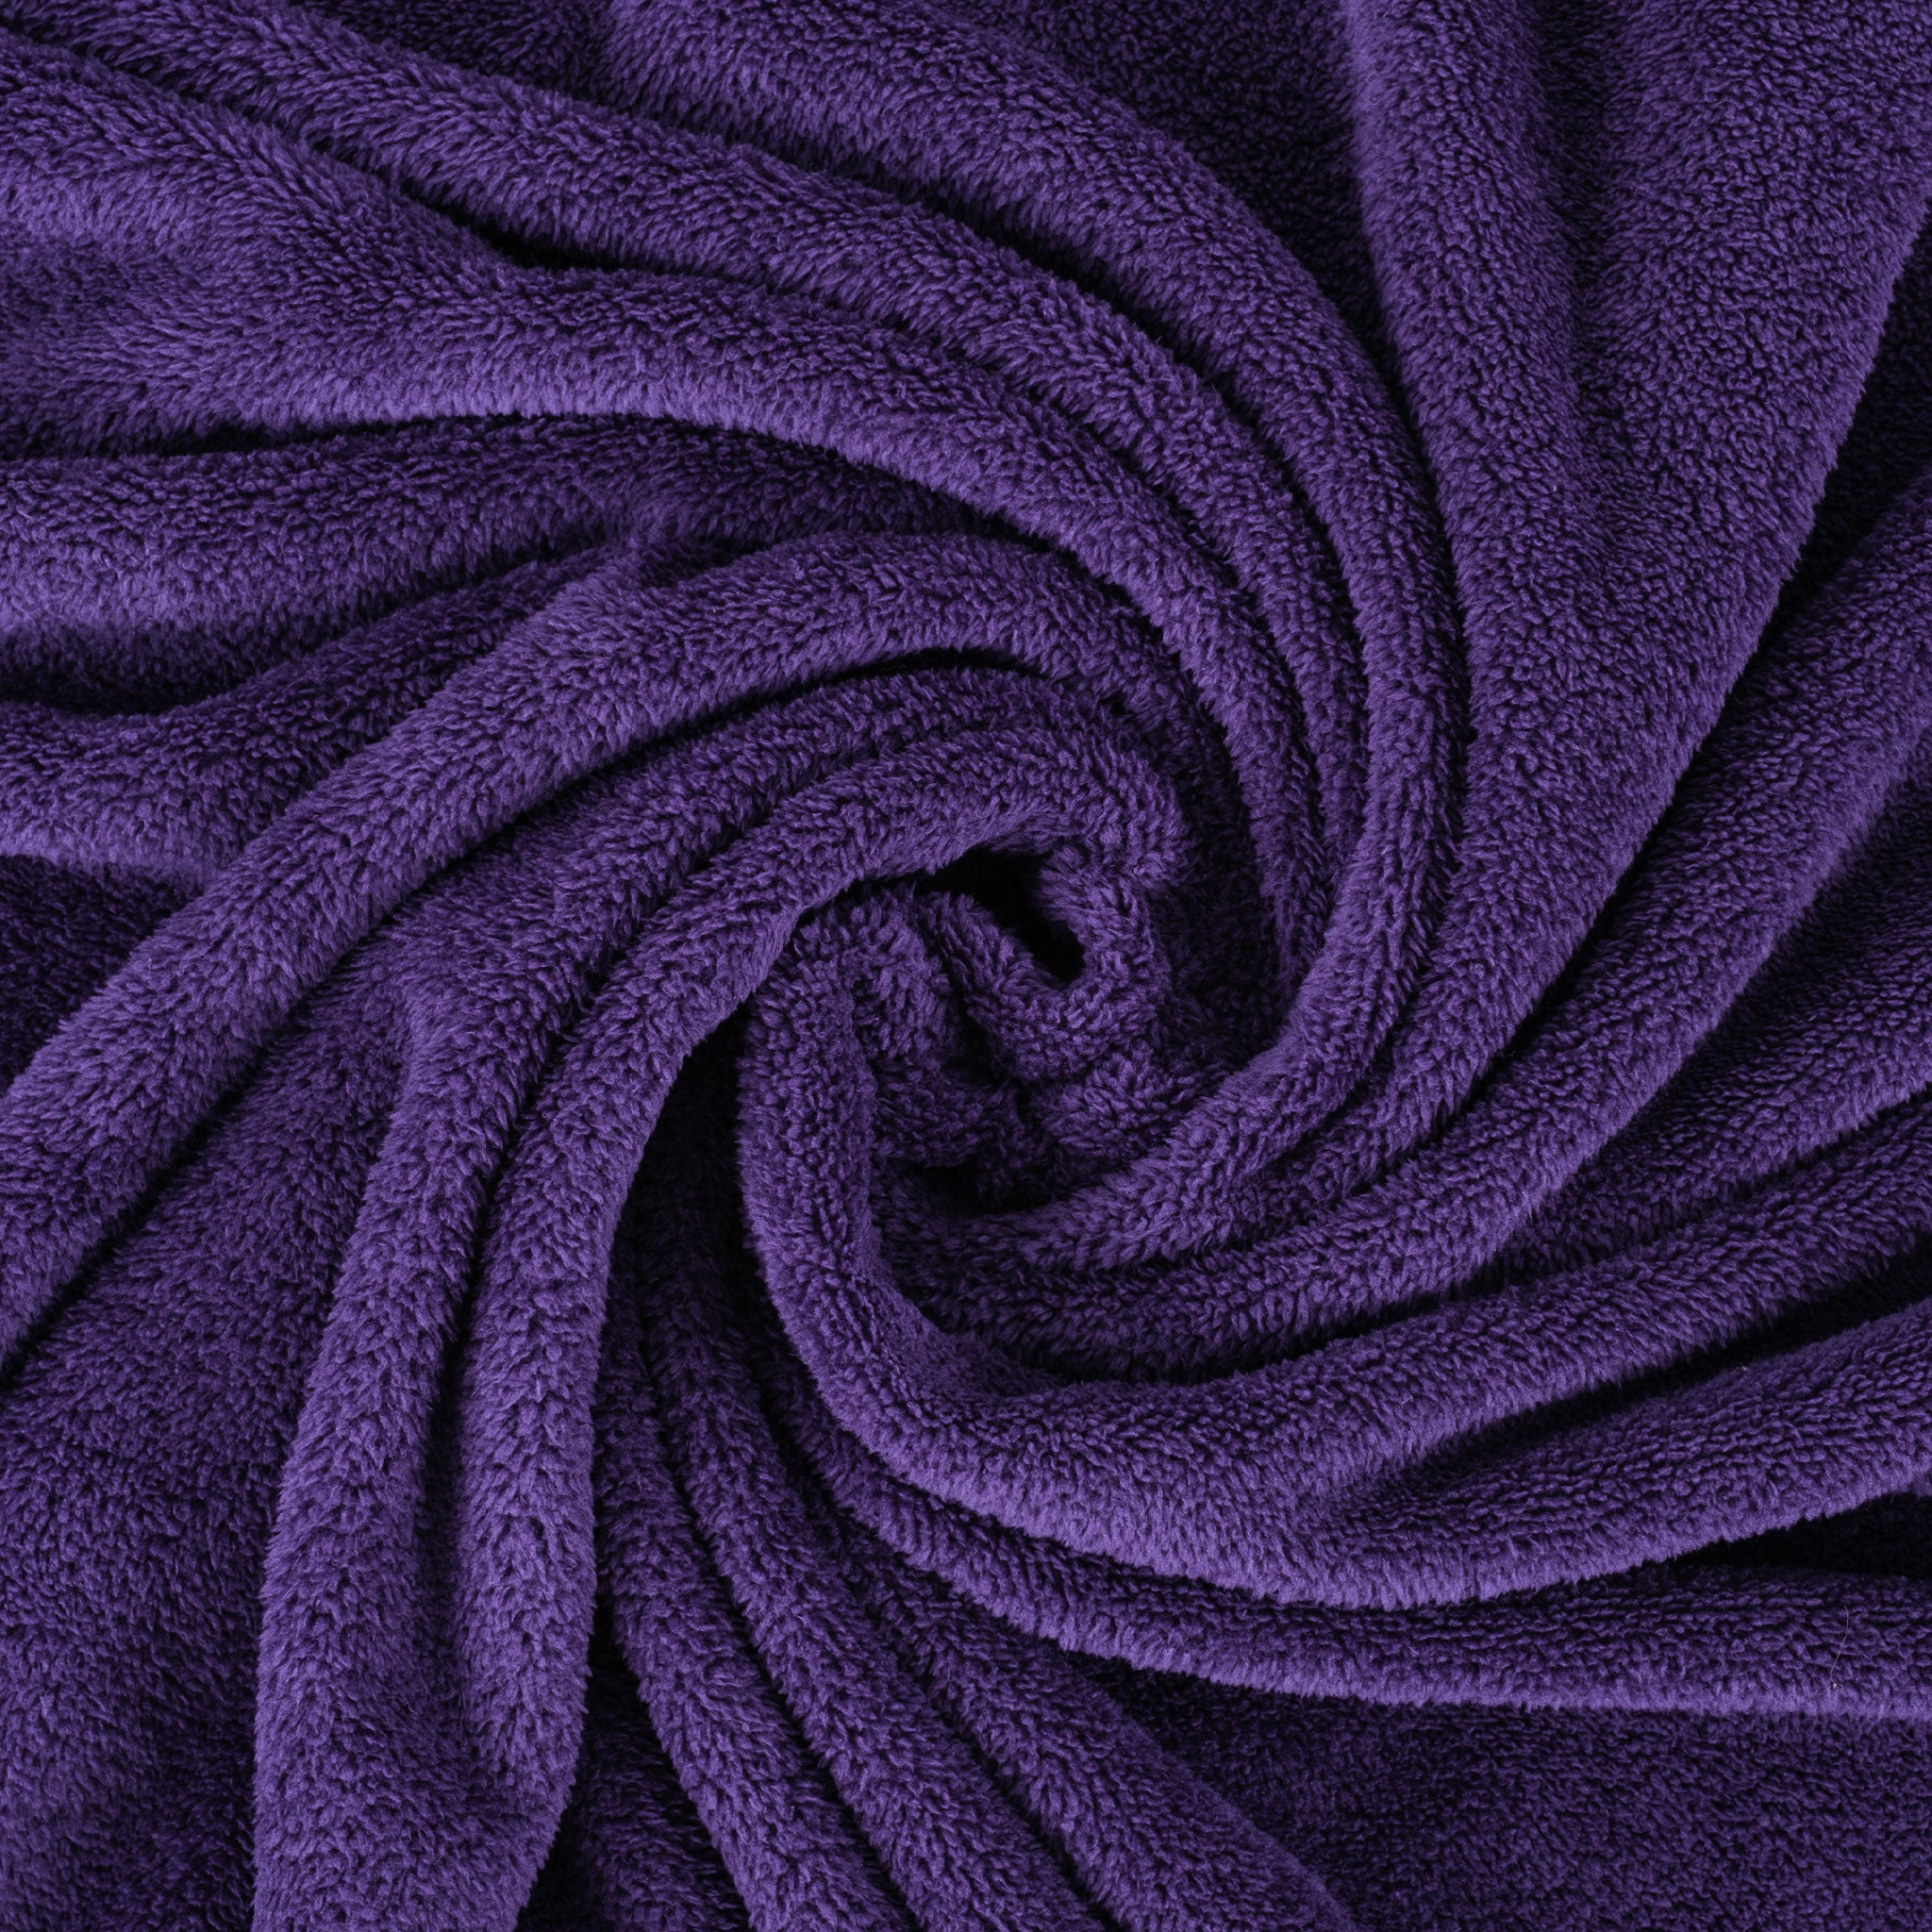 American Soft Linen - Bedding Fleece Blanket - Wholesale - 15 Set Case Pack - Twin Size 60x80 inches - Purple - 5